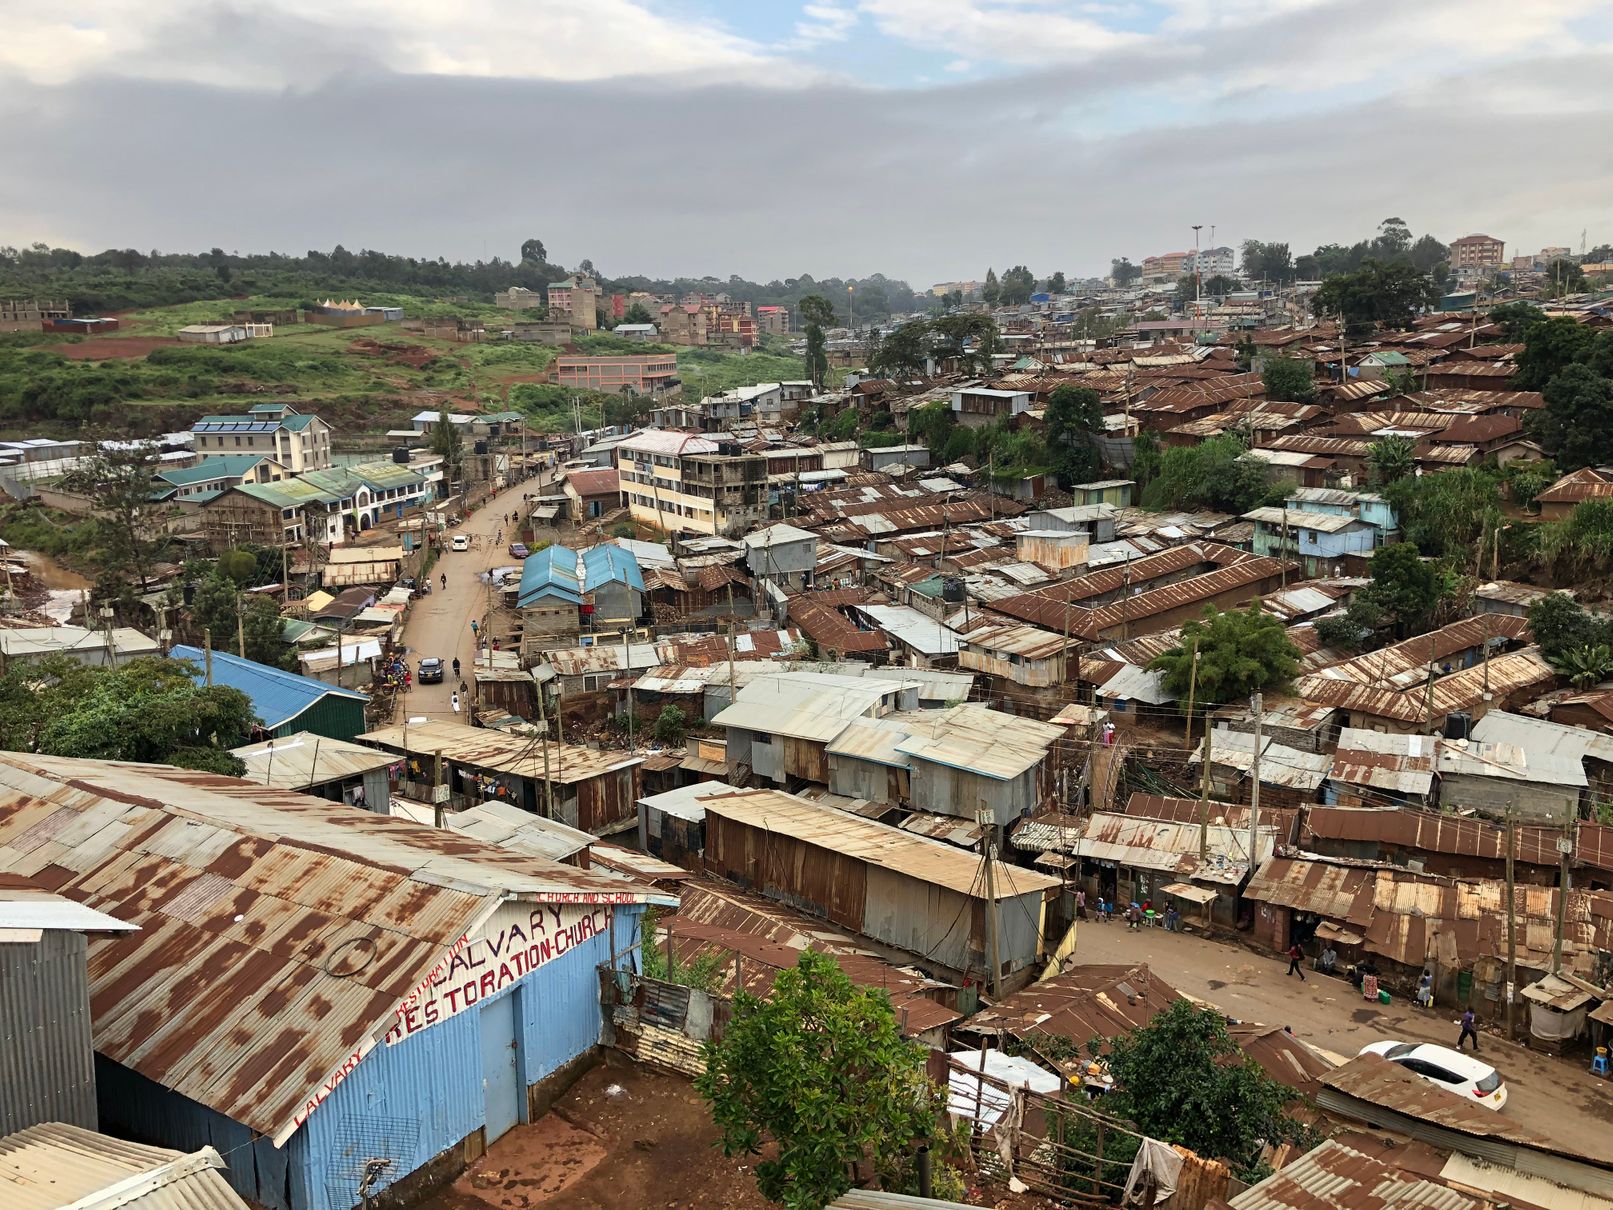 view of Kibera Slum from above